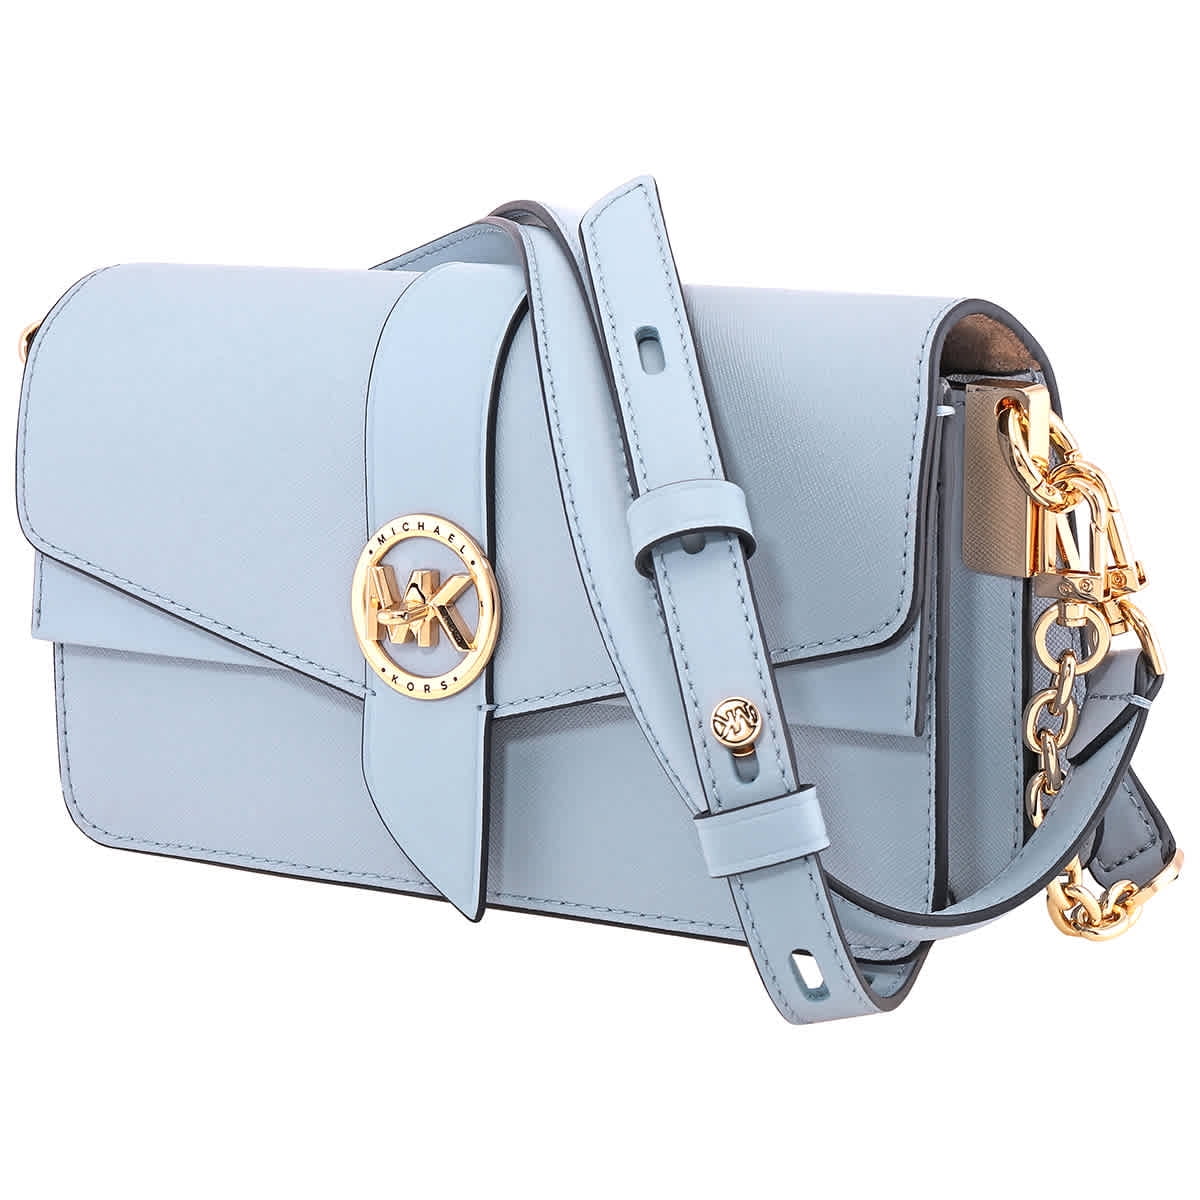 Michael Kors Ladies Greenwich Medium Saffiano Leather Shoulder Bag - Pale Blue